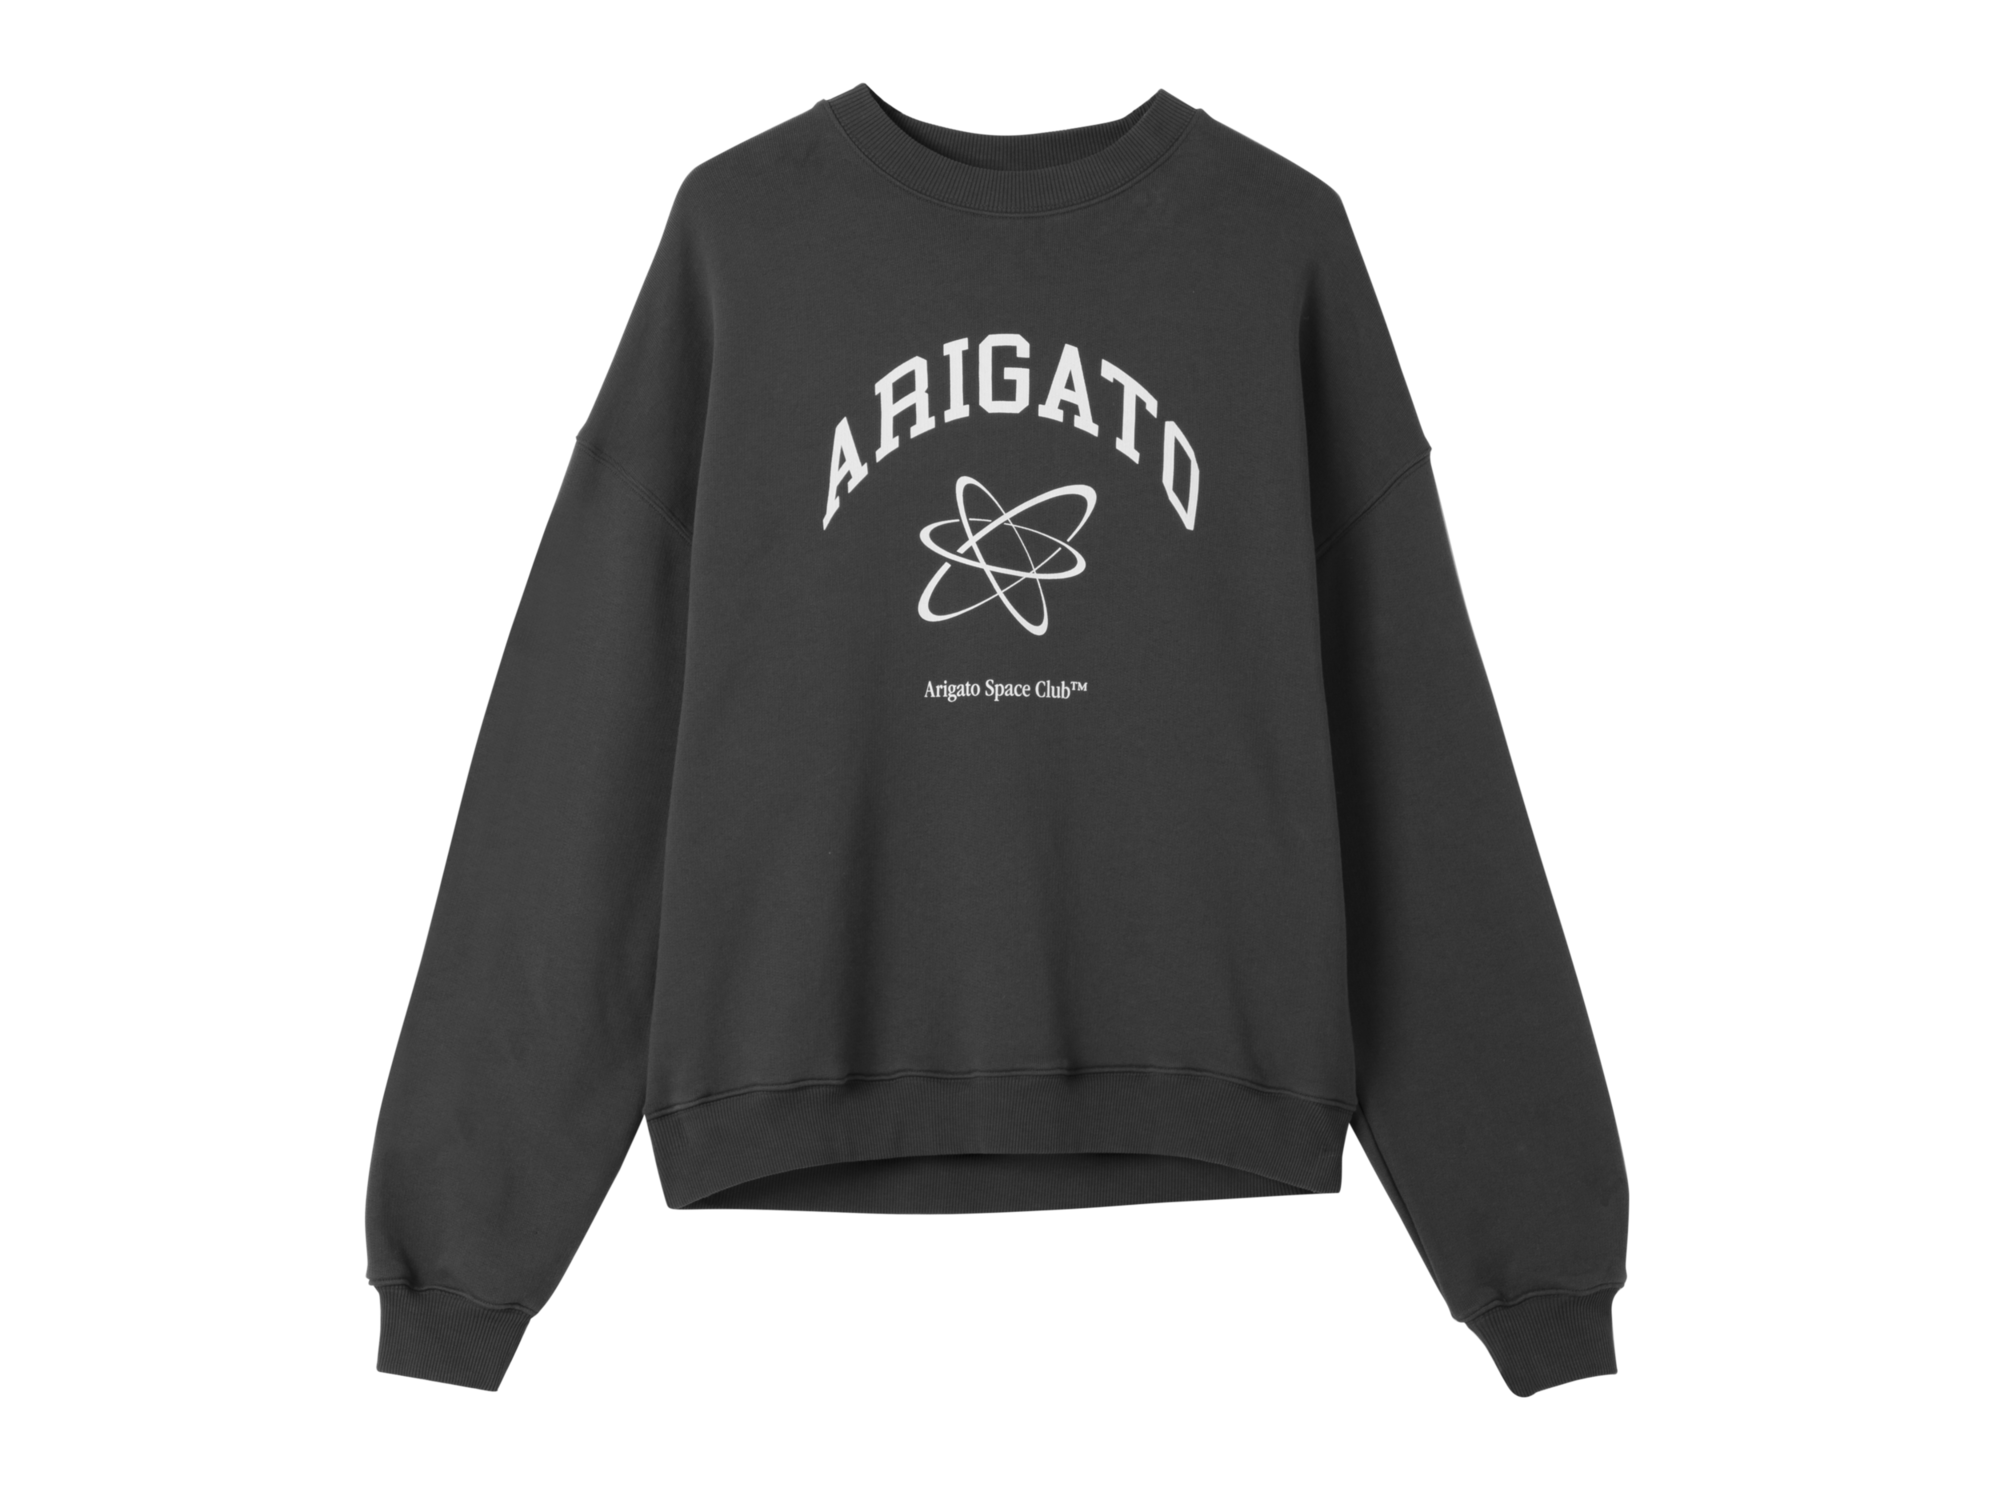 Arigato Space Club Sweatshirt